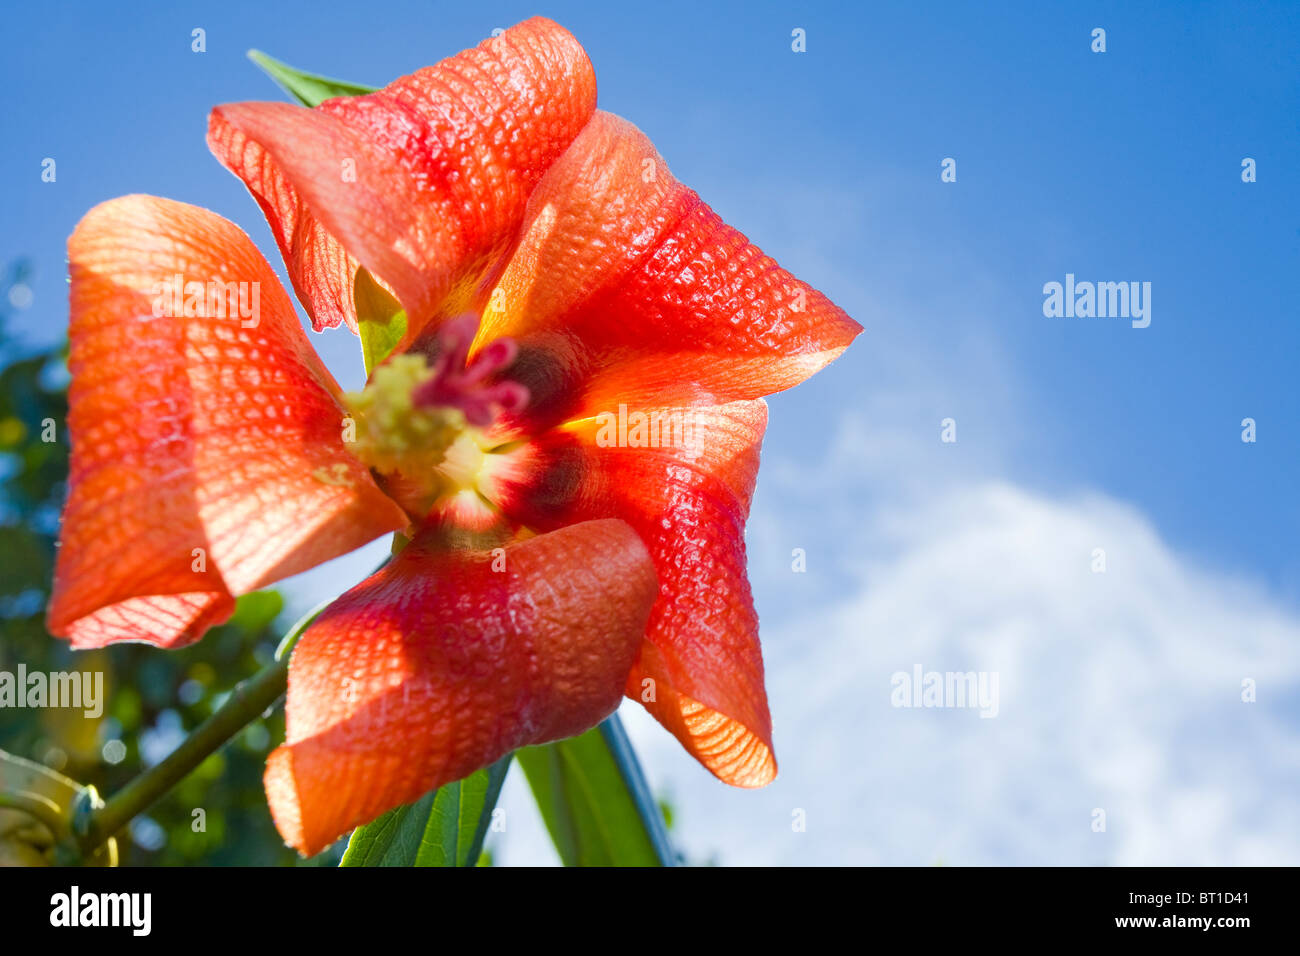 The Caribbean Mahoe Tree (Hibiscus elatus or Tilipariti elatum) in flower. Stock Photo